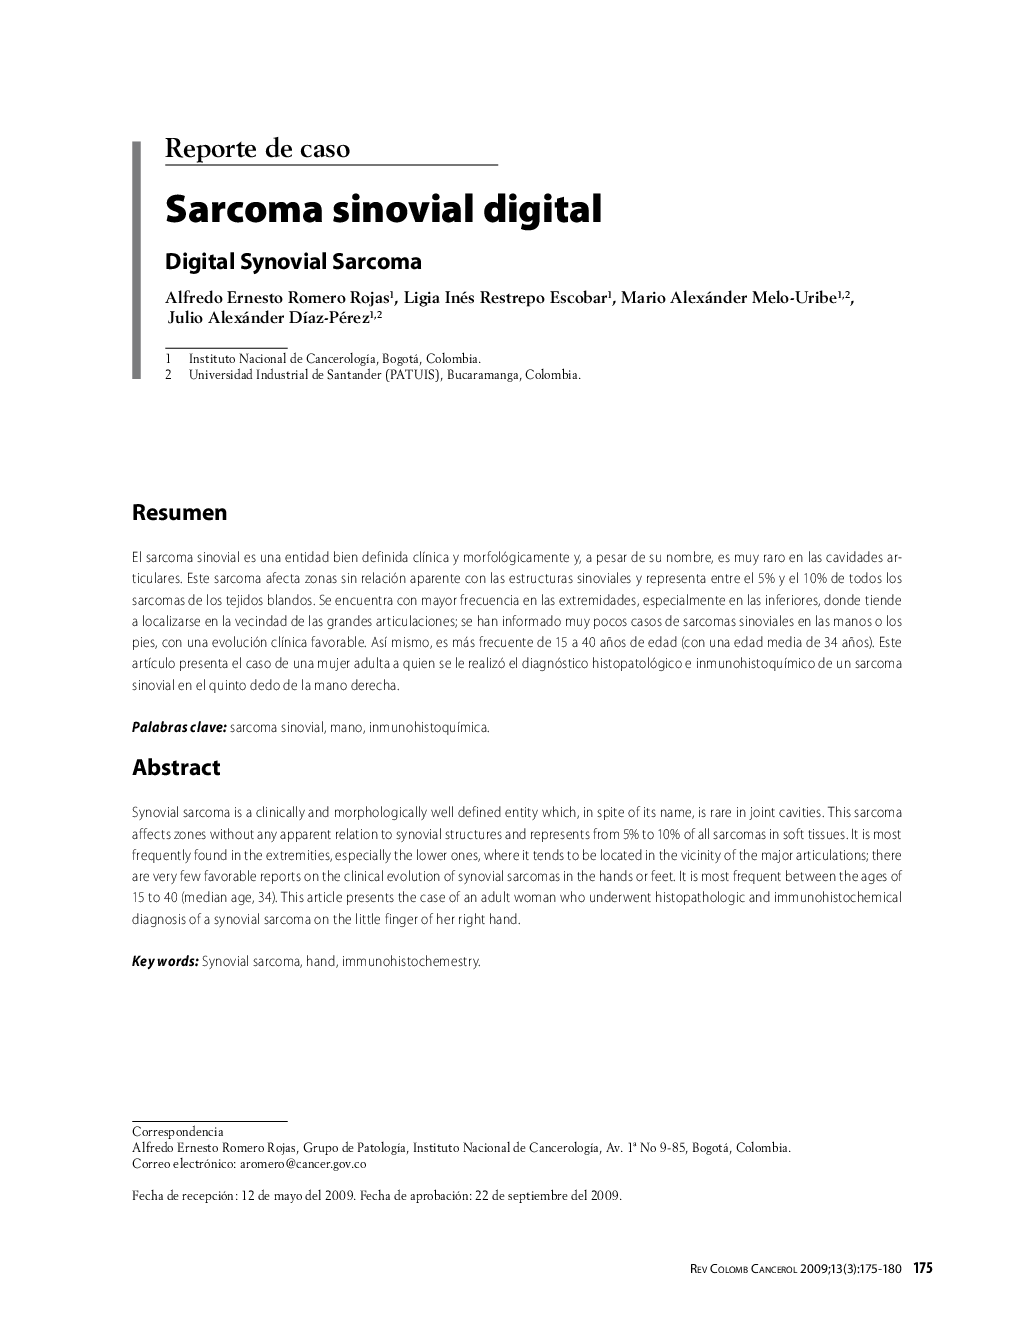 Sarcoma sinovial digitalDigital Synovial Sarcoma